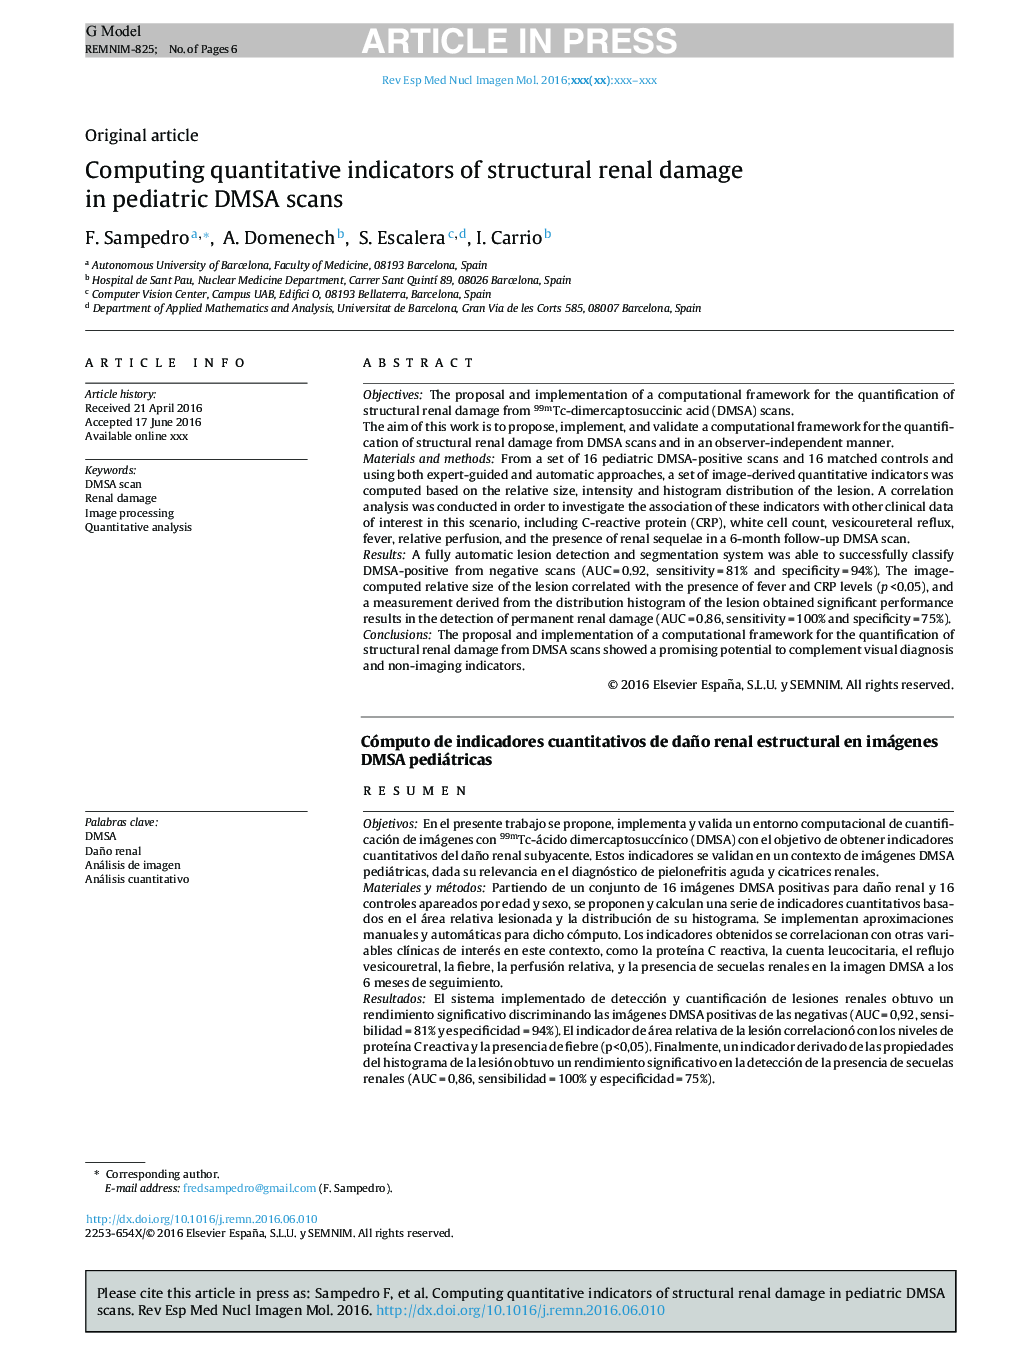 Computing quantitative indicators of structural renal damage in pediatric DMSA scans